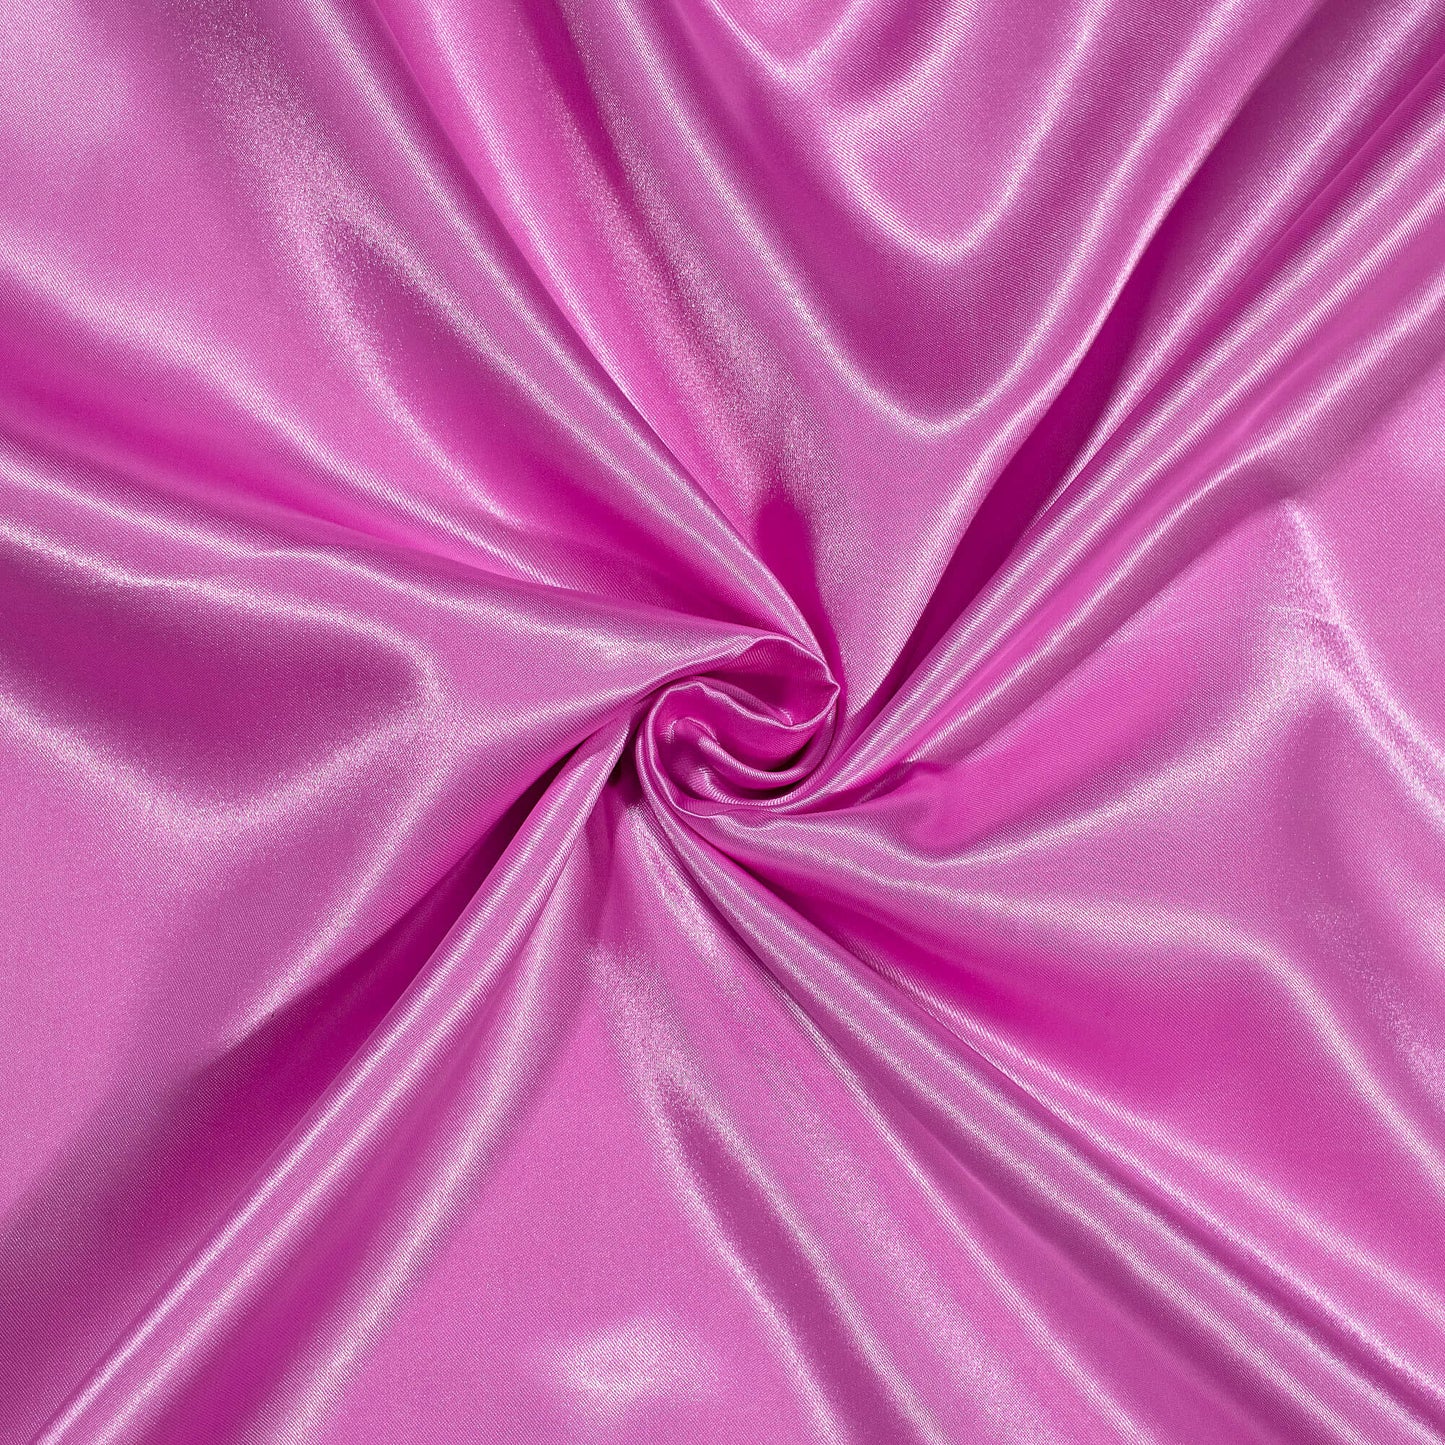 Lace Pink Plain Neon Ultra Satin Fabric